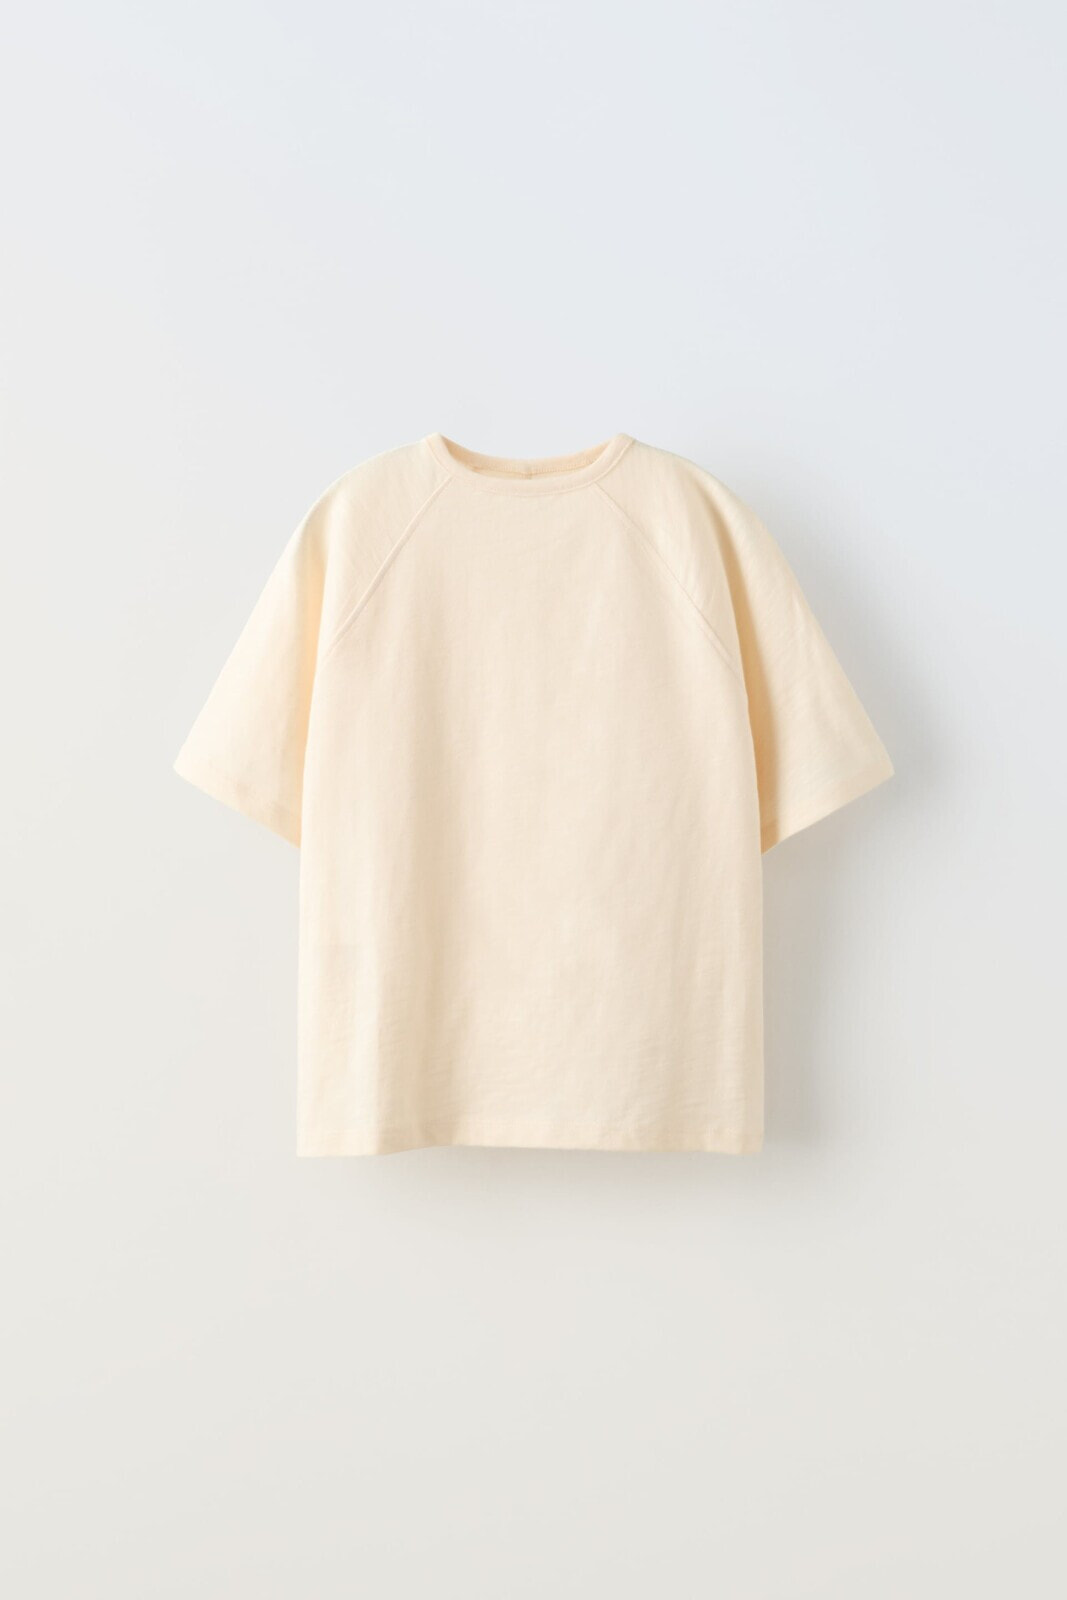 Slub knit raglan sleeve t-shirt